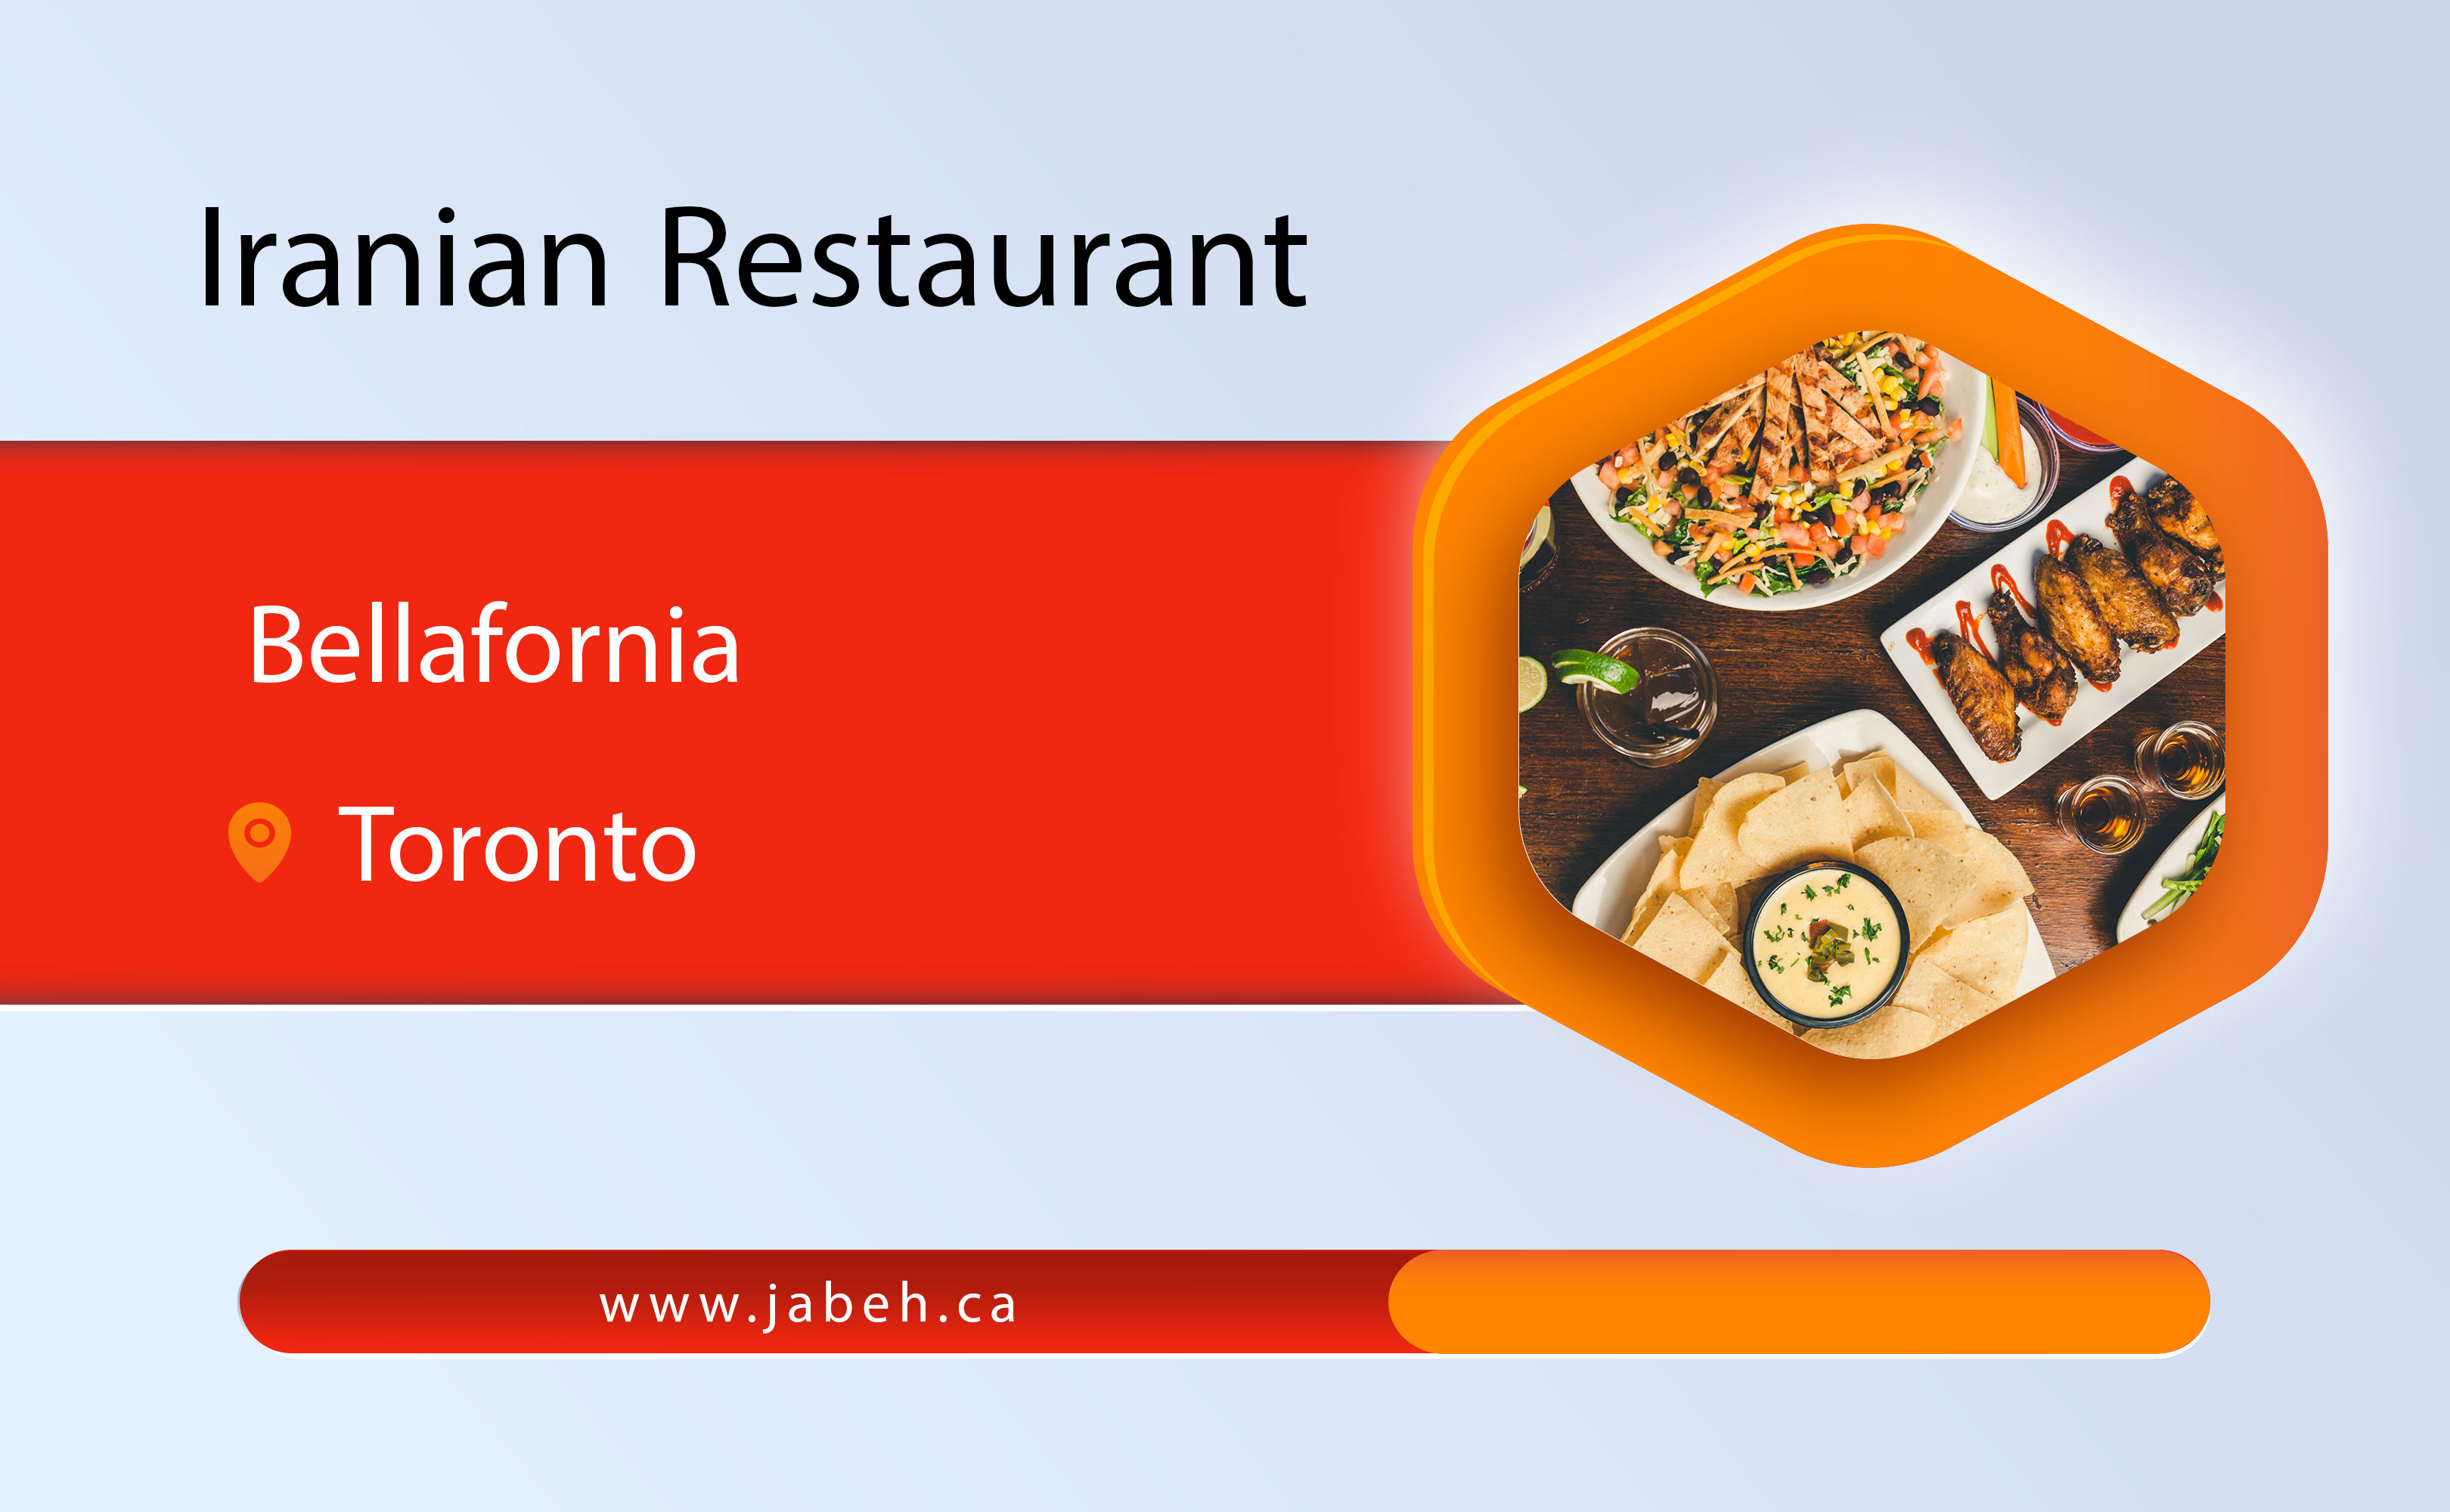 Iranian restaurant in Toronto, Florida